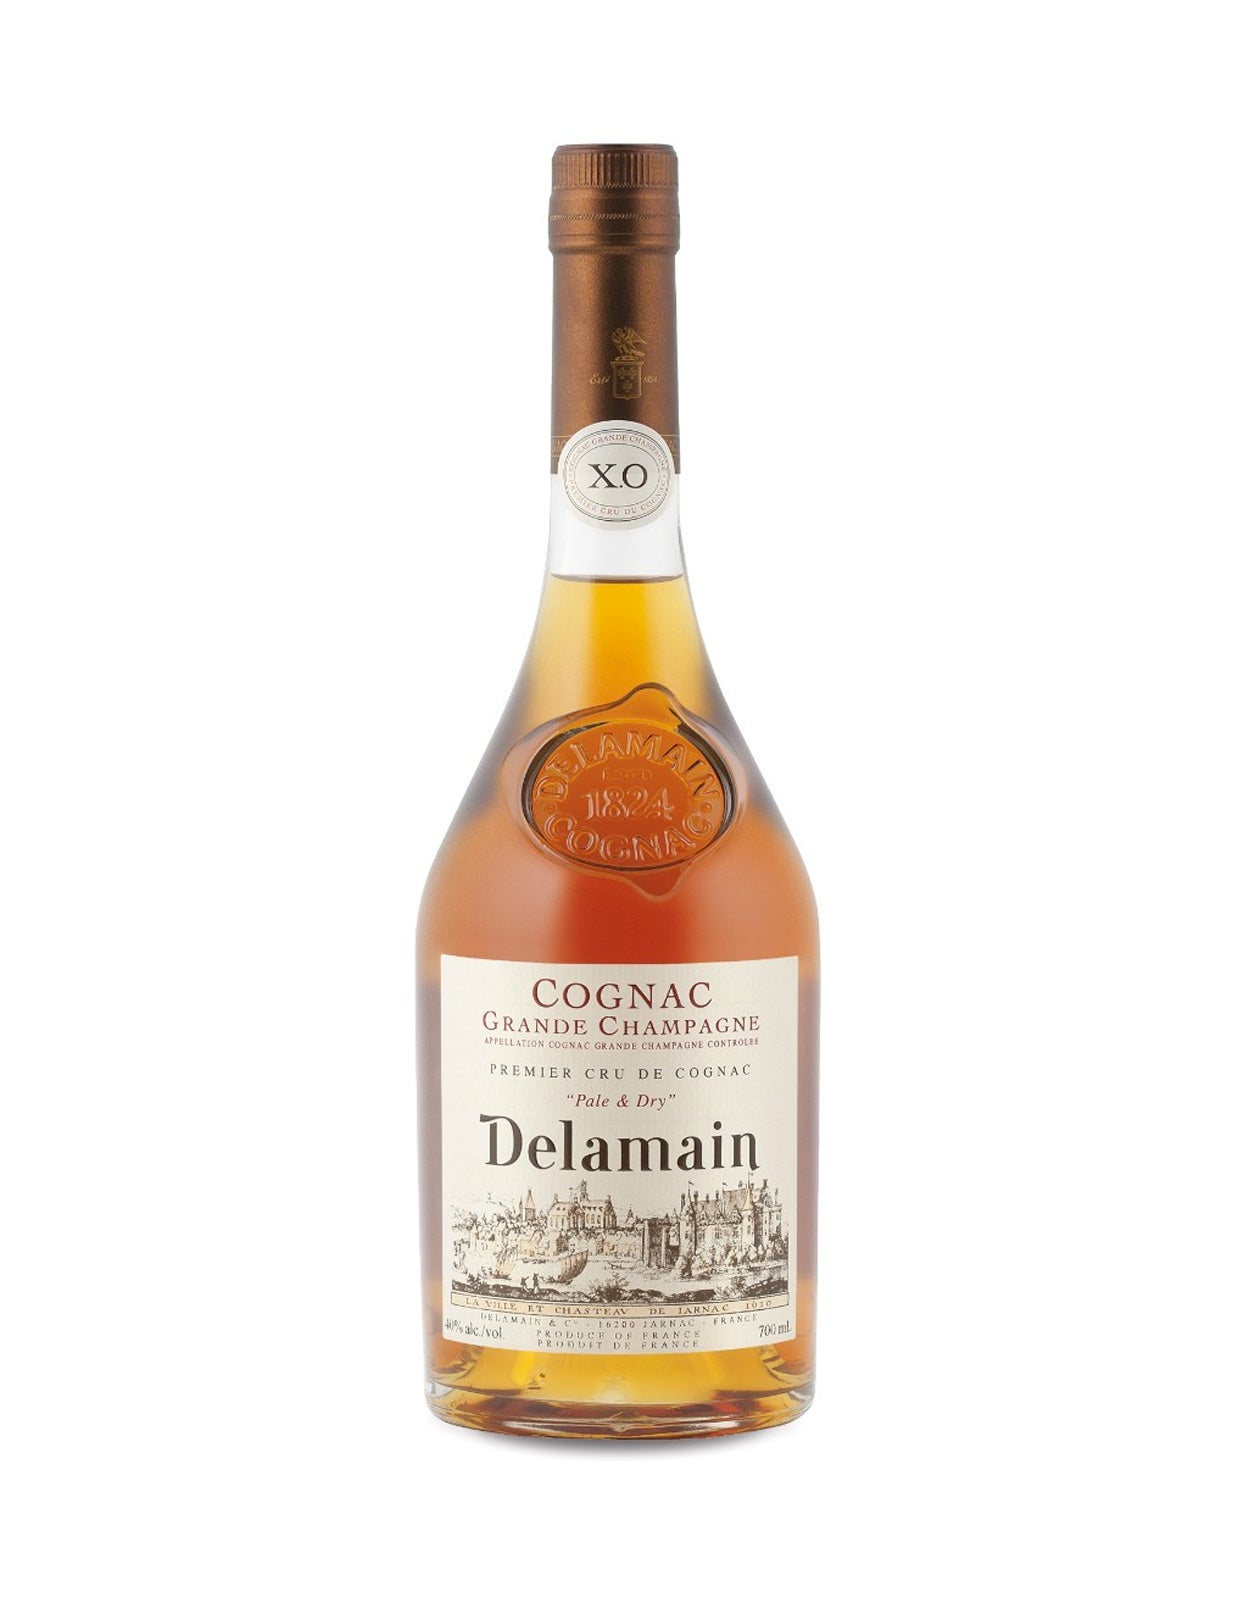 Delamain XO Grande Champagne Pale & Dry Cognac